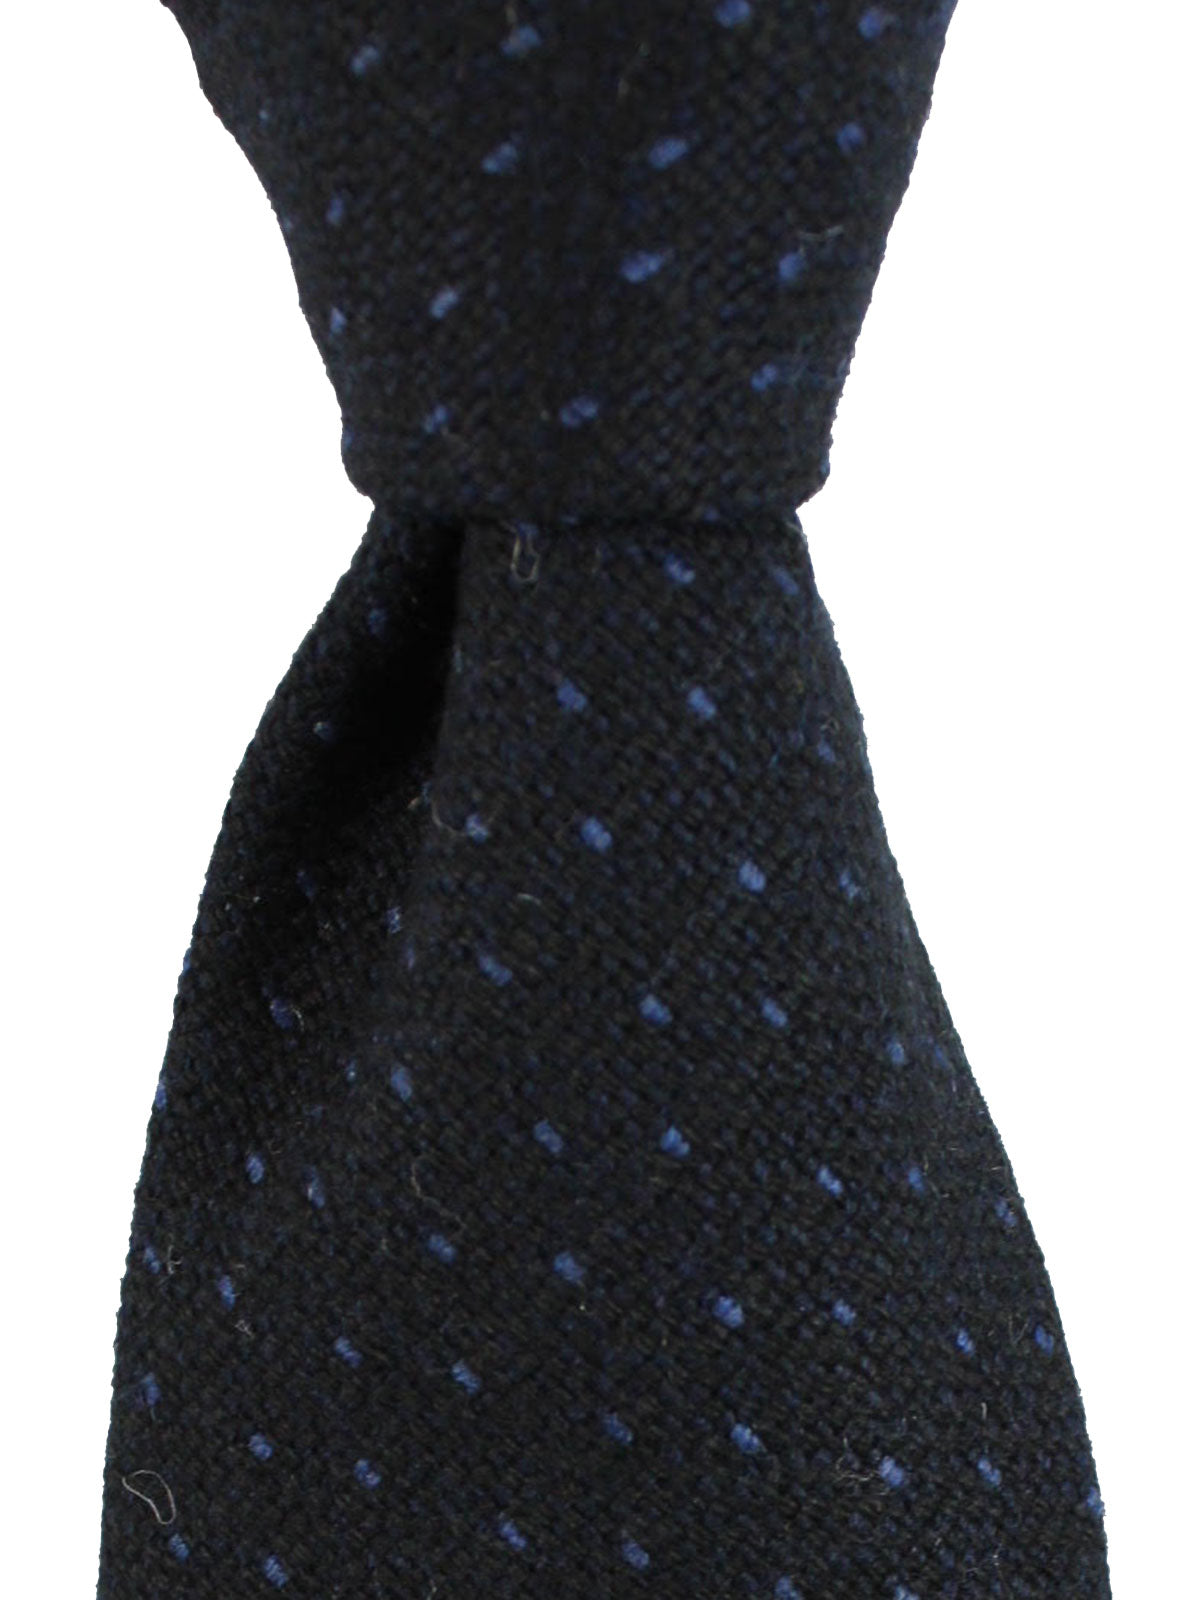 Luigi Borrelli Tie Black Royal Blue Design Wool Silk